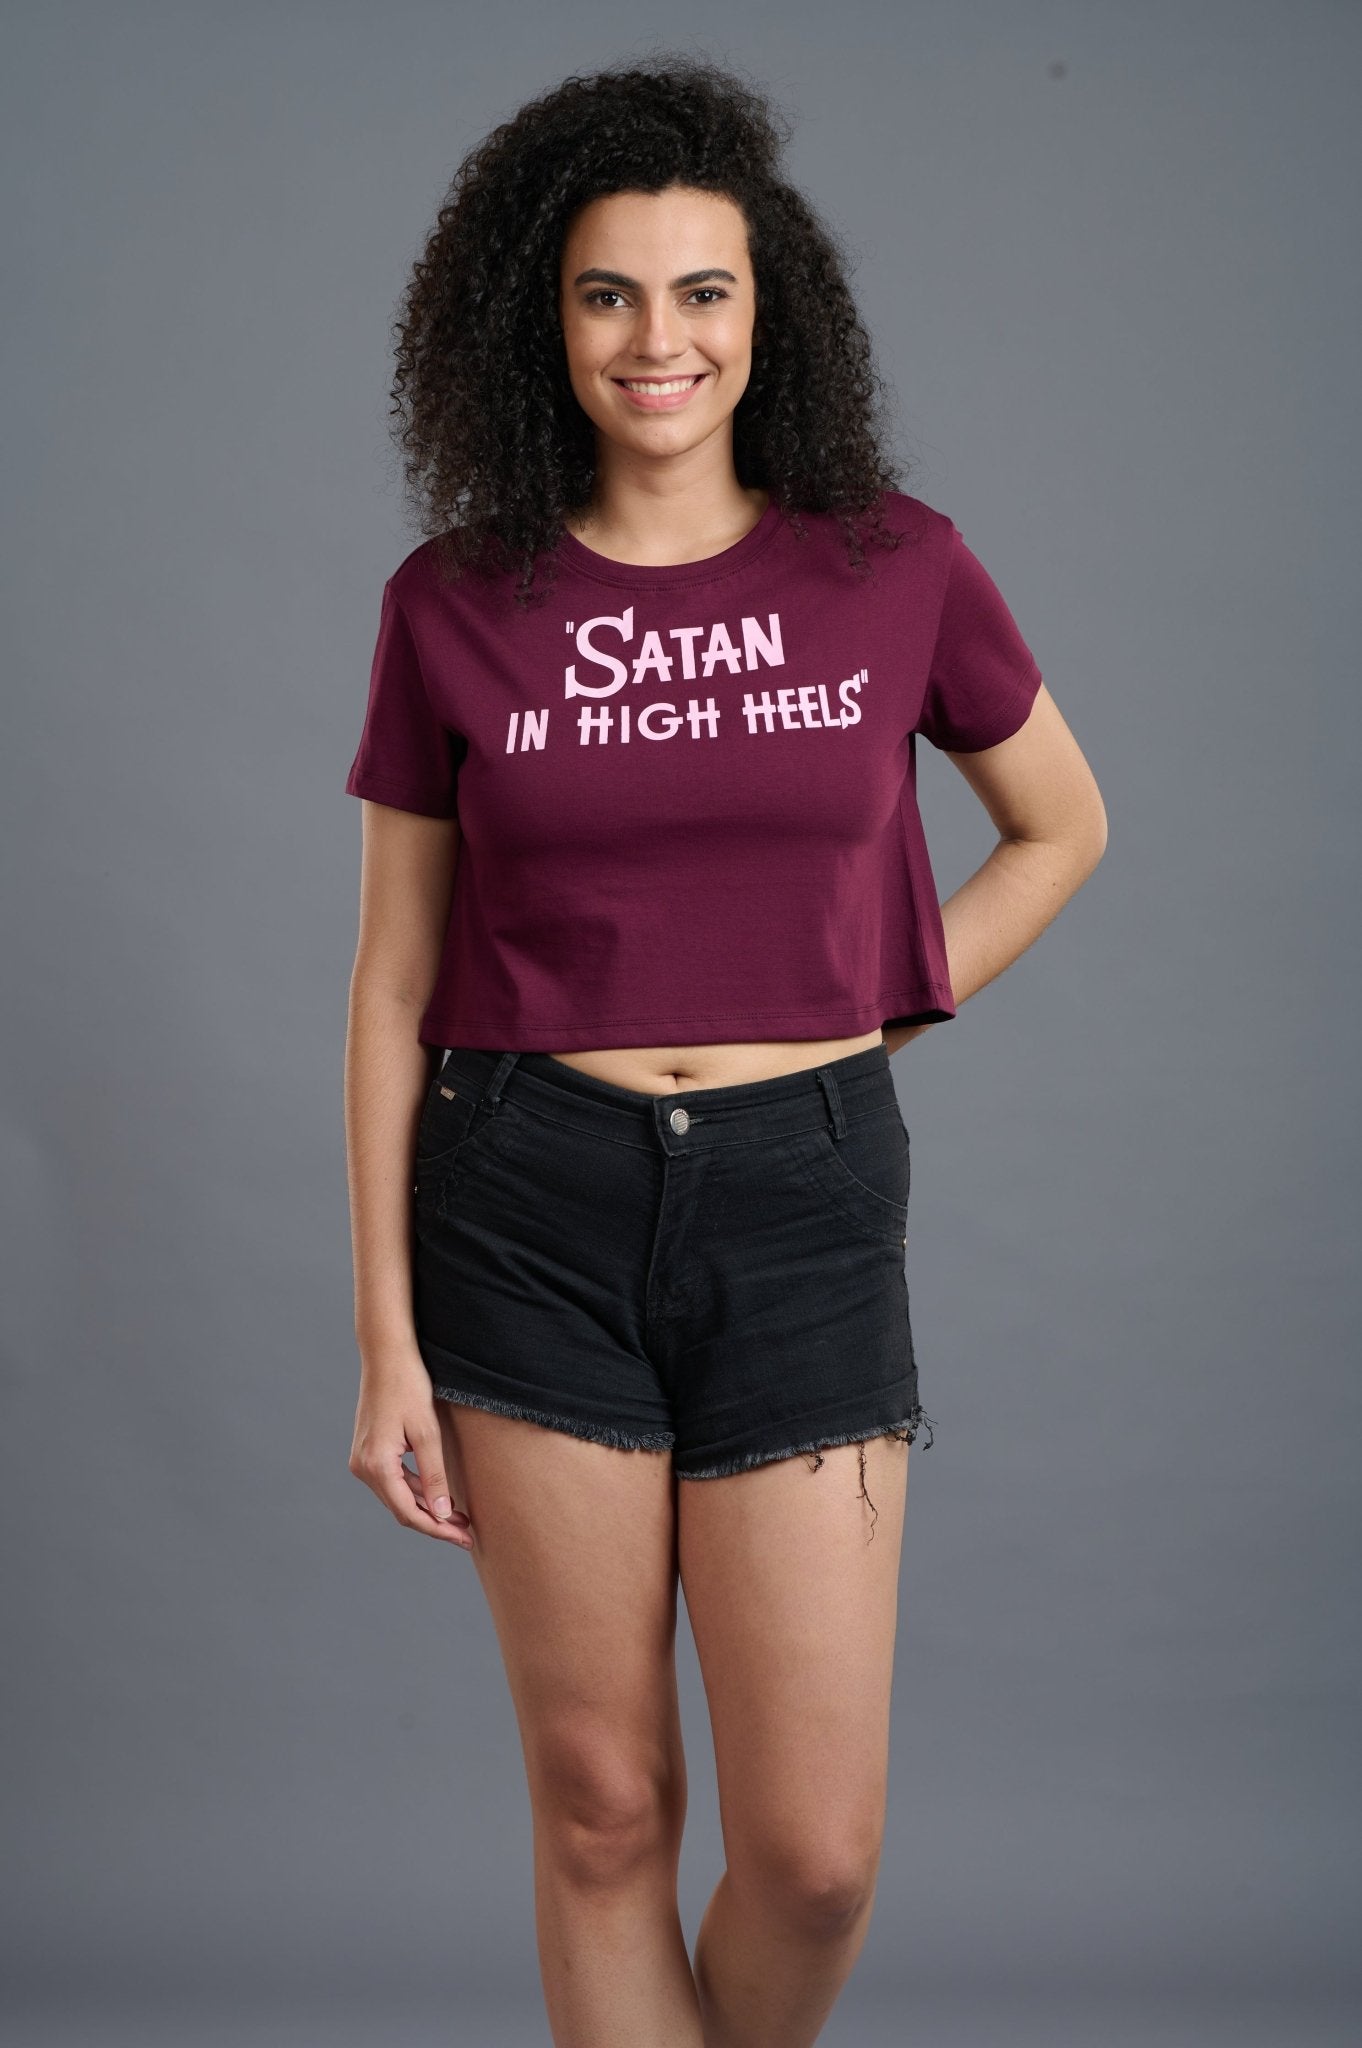 Satan In High Heels Printed Maroon Crop Top for Women - Go Devil